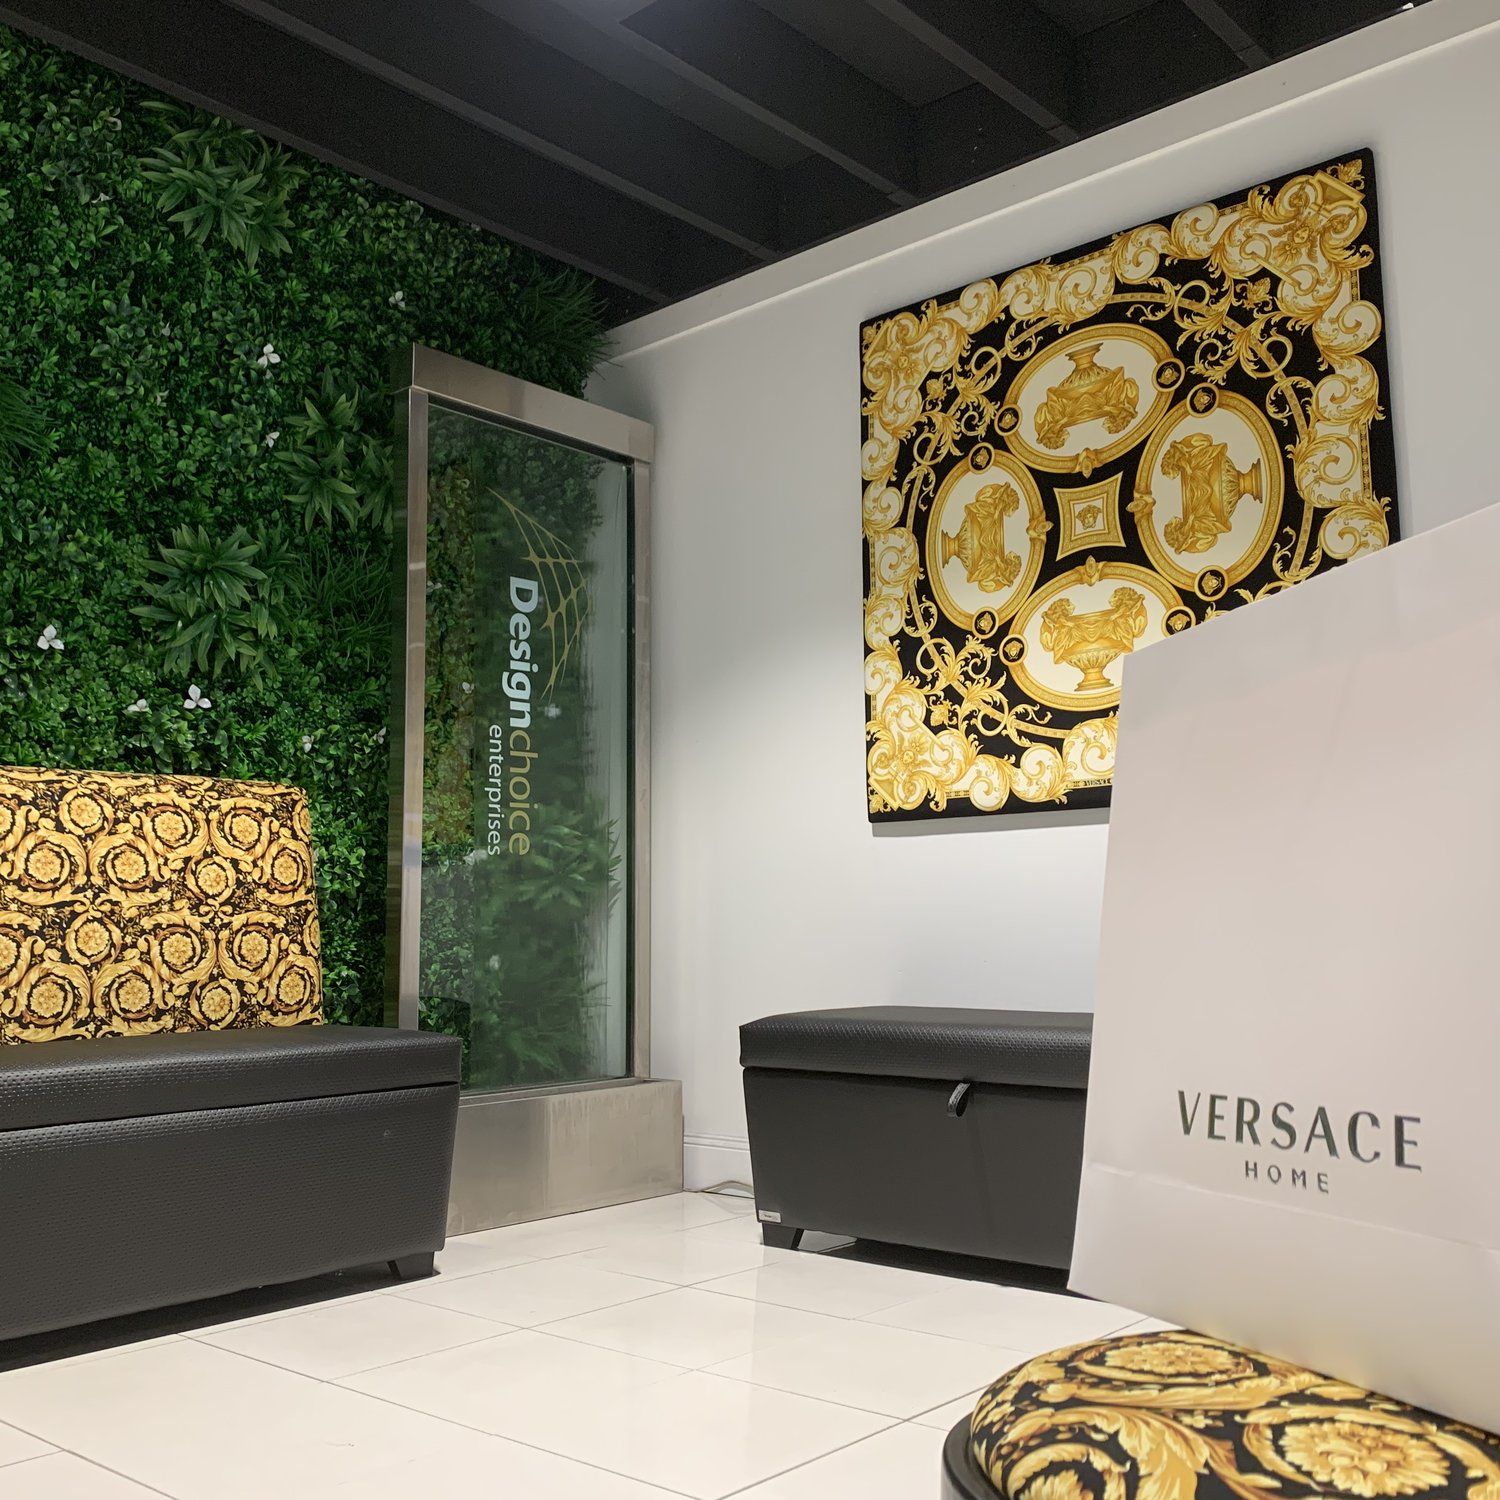 Versace Home Collection - Design Choice